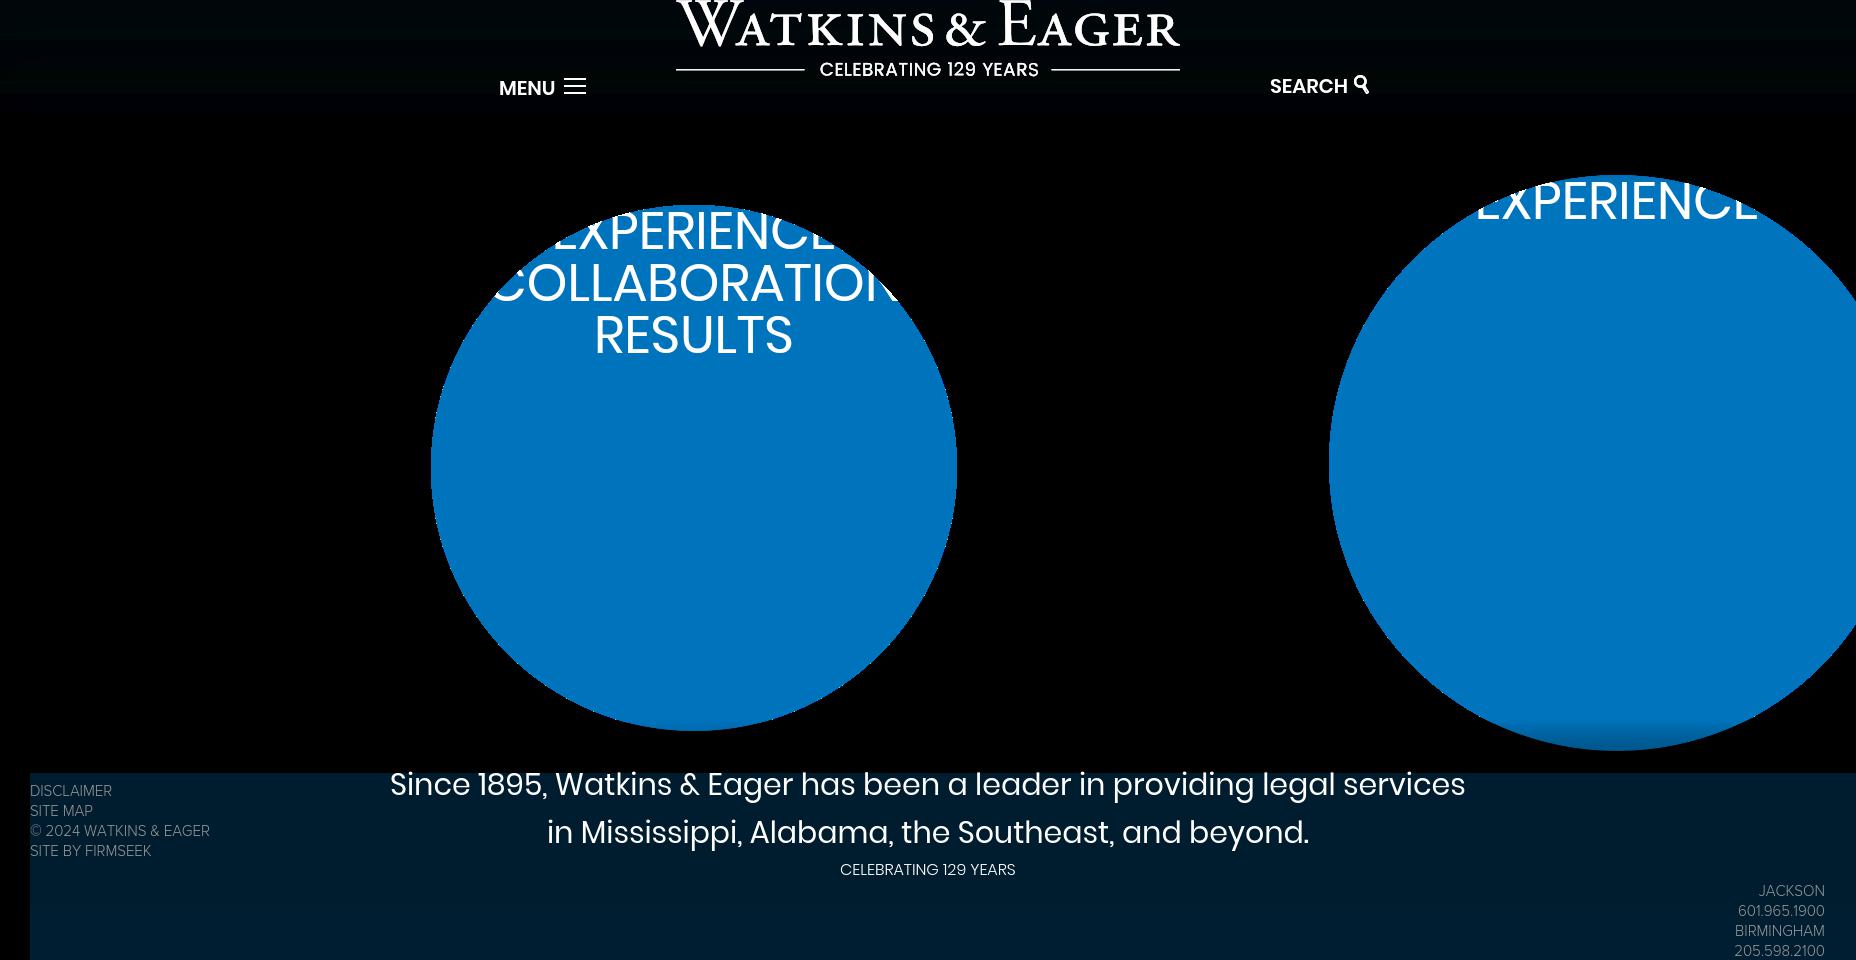 Watkins & Eager PLLC - Jackson MS Lawyers